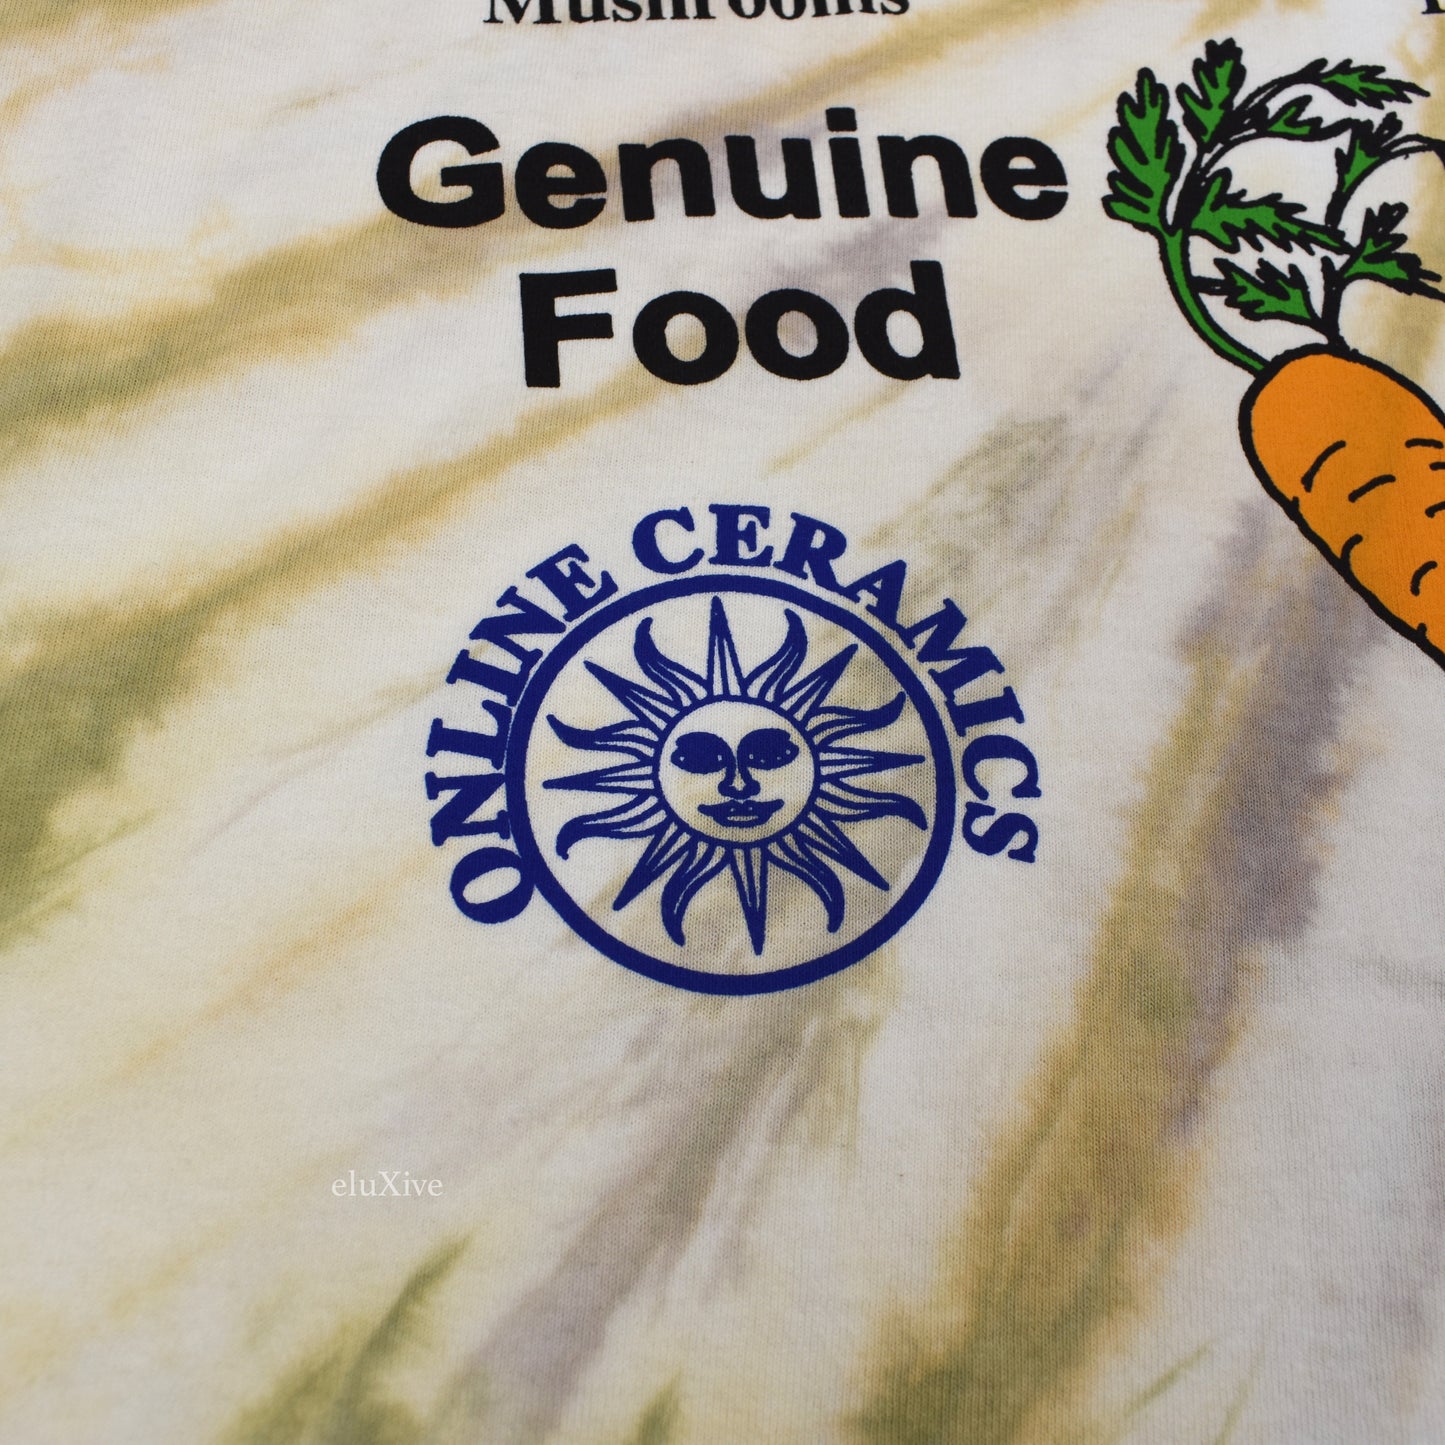 Online Ceramics - Genuine Food 'Veggies' Tie Dye T-Shirt